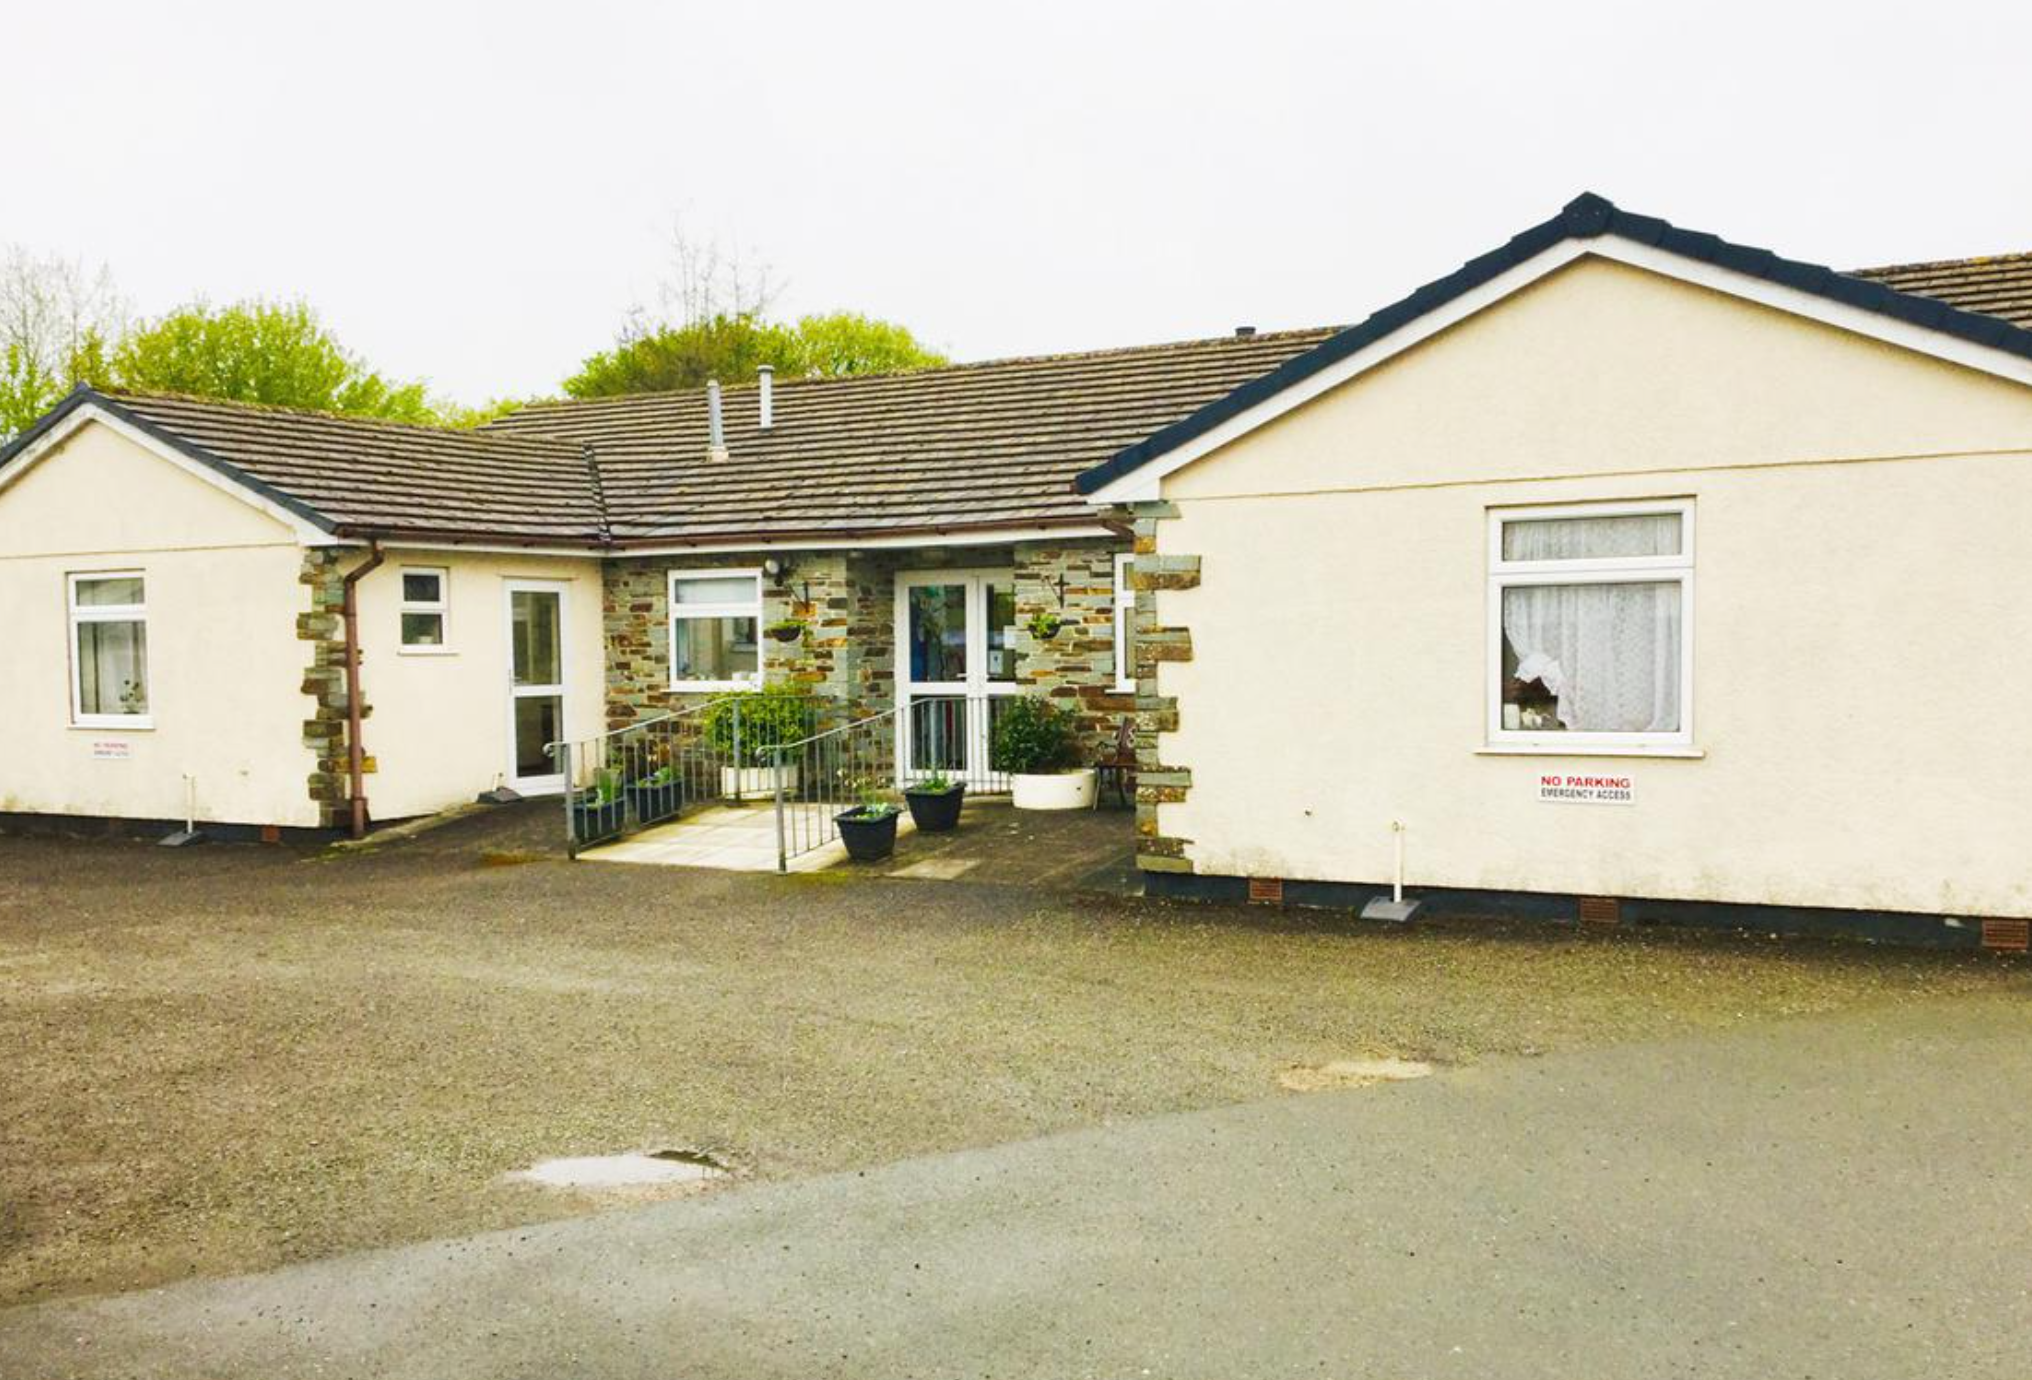 Appleby Lodge care home, East Cornwall